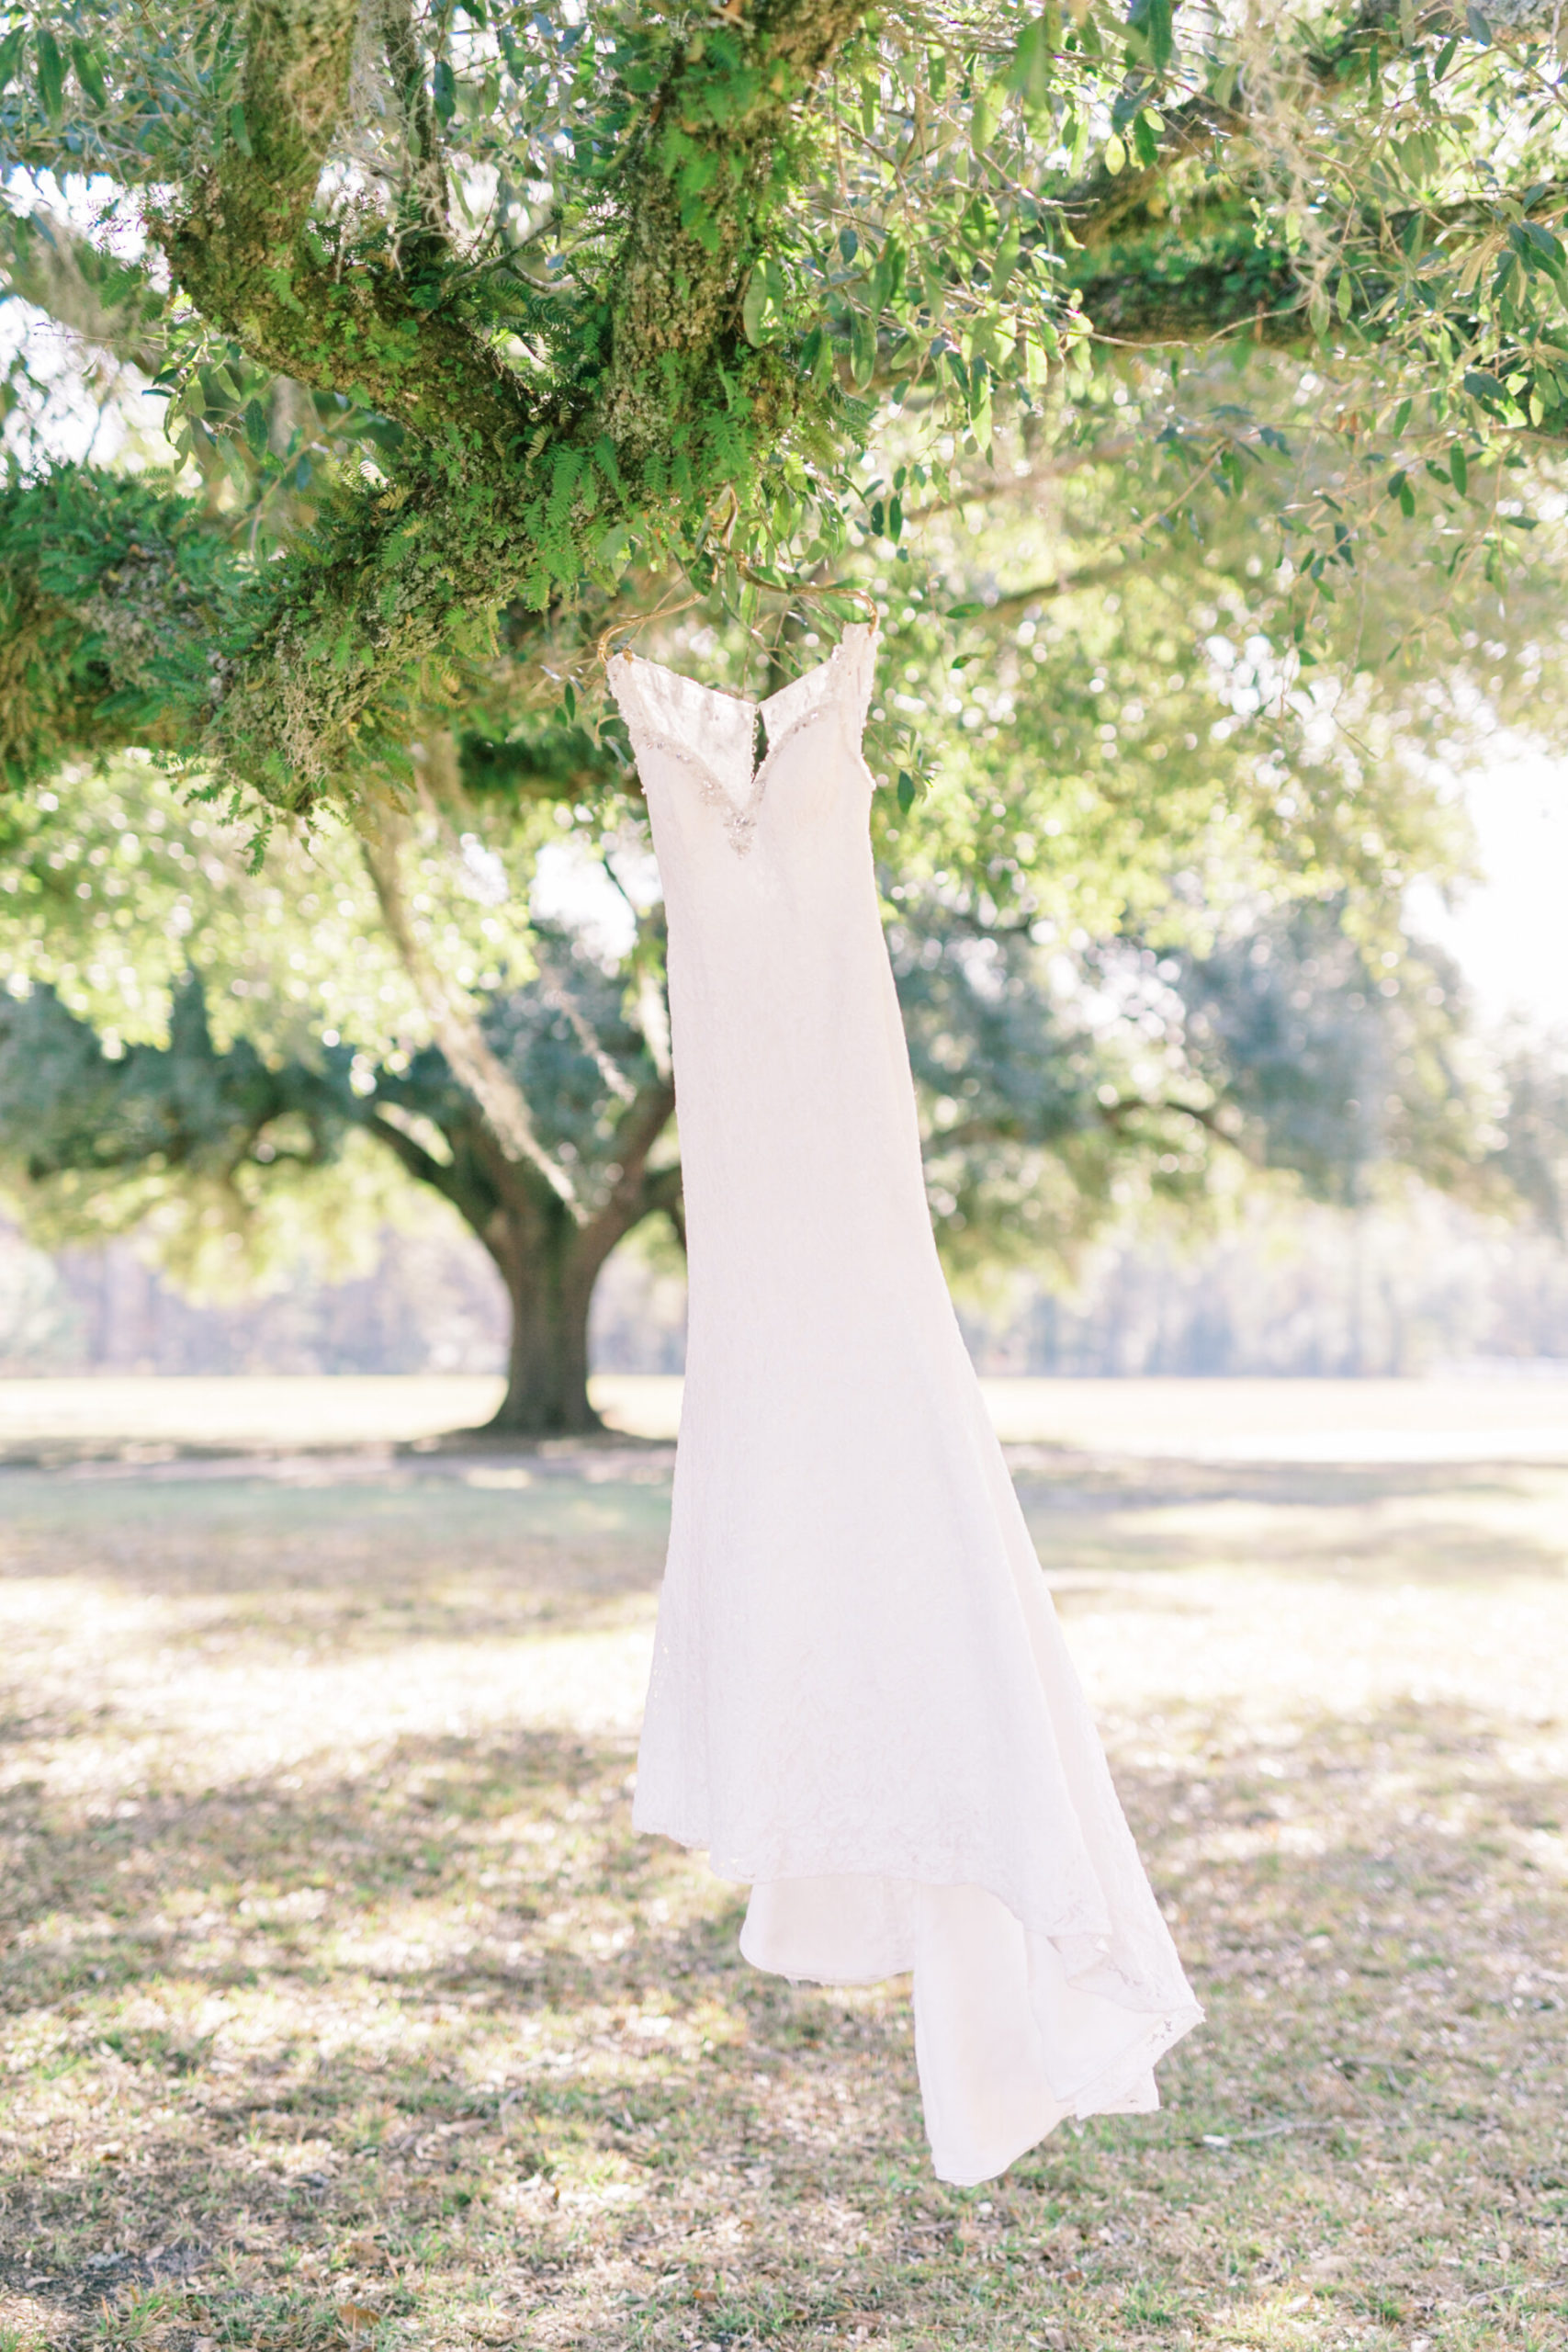 Stunning wedding dress at a South Carolina plantation wedding.